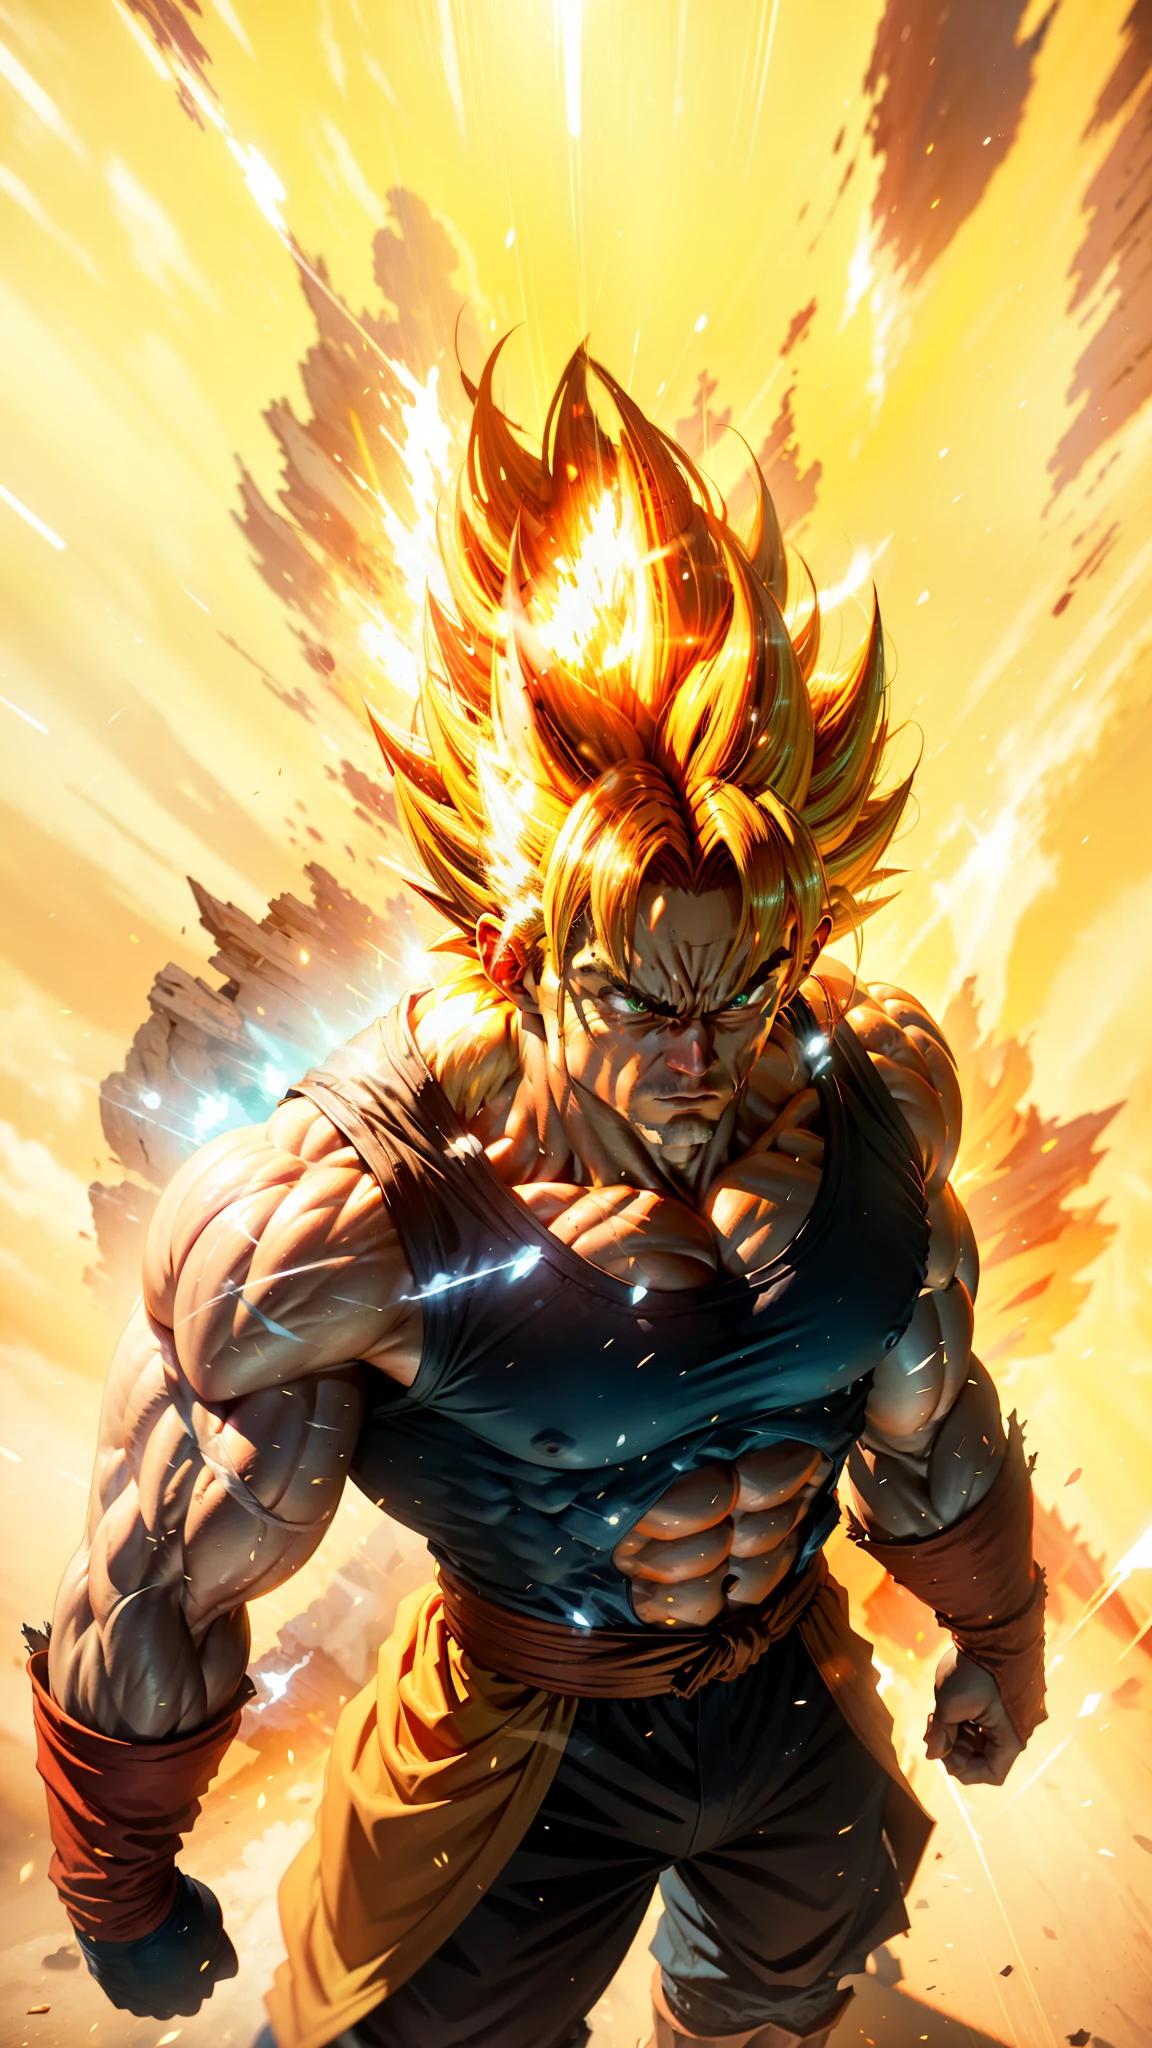 Goku Super Saiyan, 극도로 근육질의 네온 황금빛 머리를 가진 성인 남성, 정맥으로 가득 찬 정의된 근육, 진한 파란색 조끼, 빨간 장갑, 진지한 얼굴, 근육 정의, 큰 어깨, 둥근 팔뚝, 언리얼 엔진 5.8K.